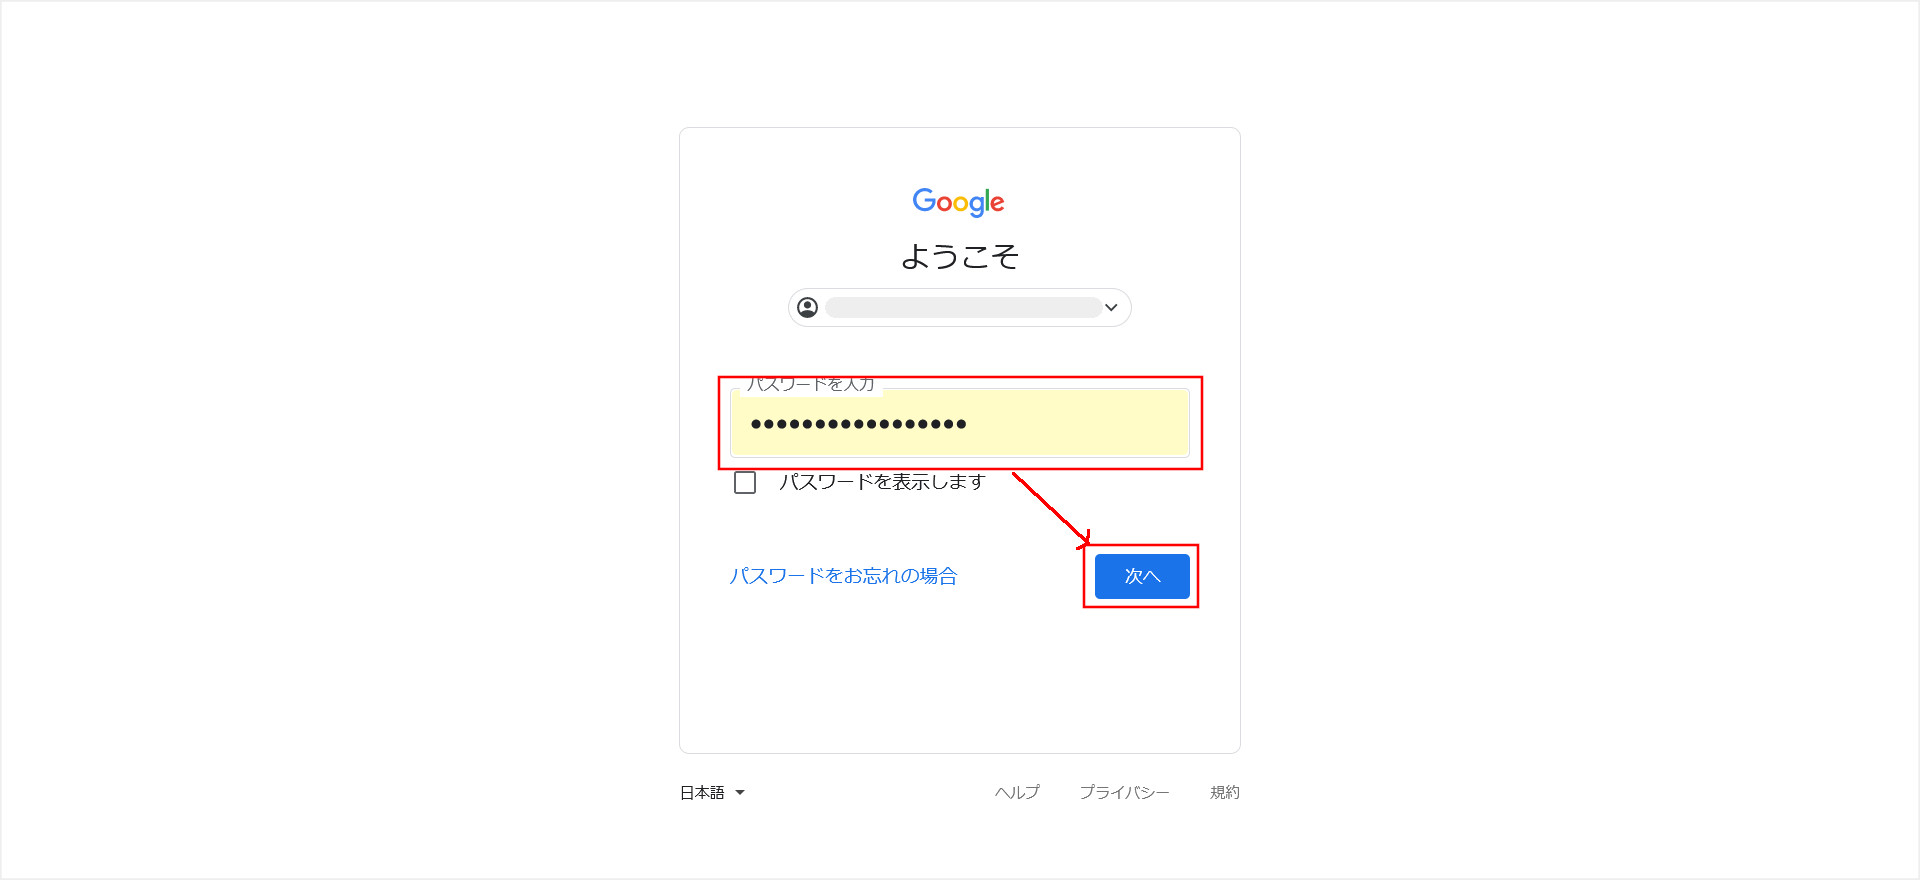 「Google Search Console」へのログイン画面